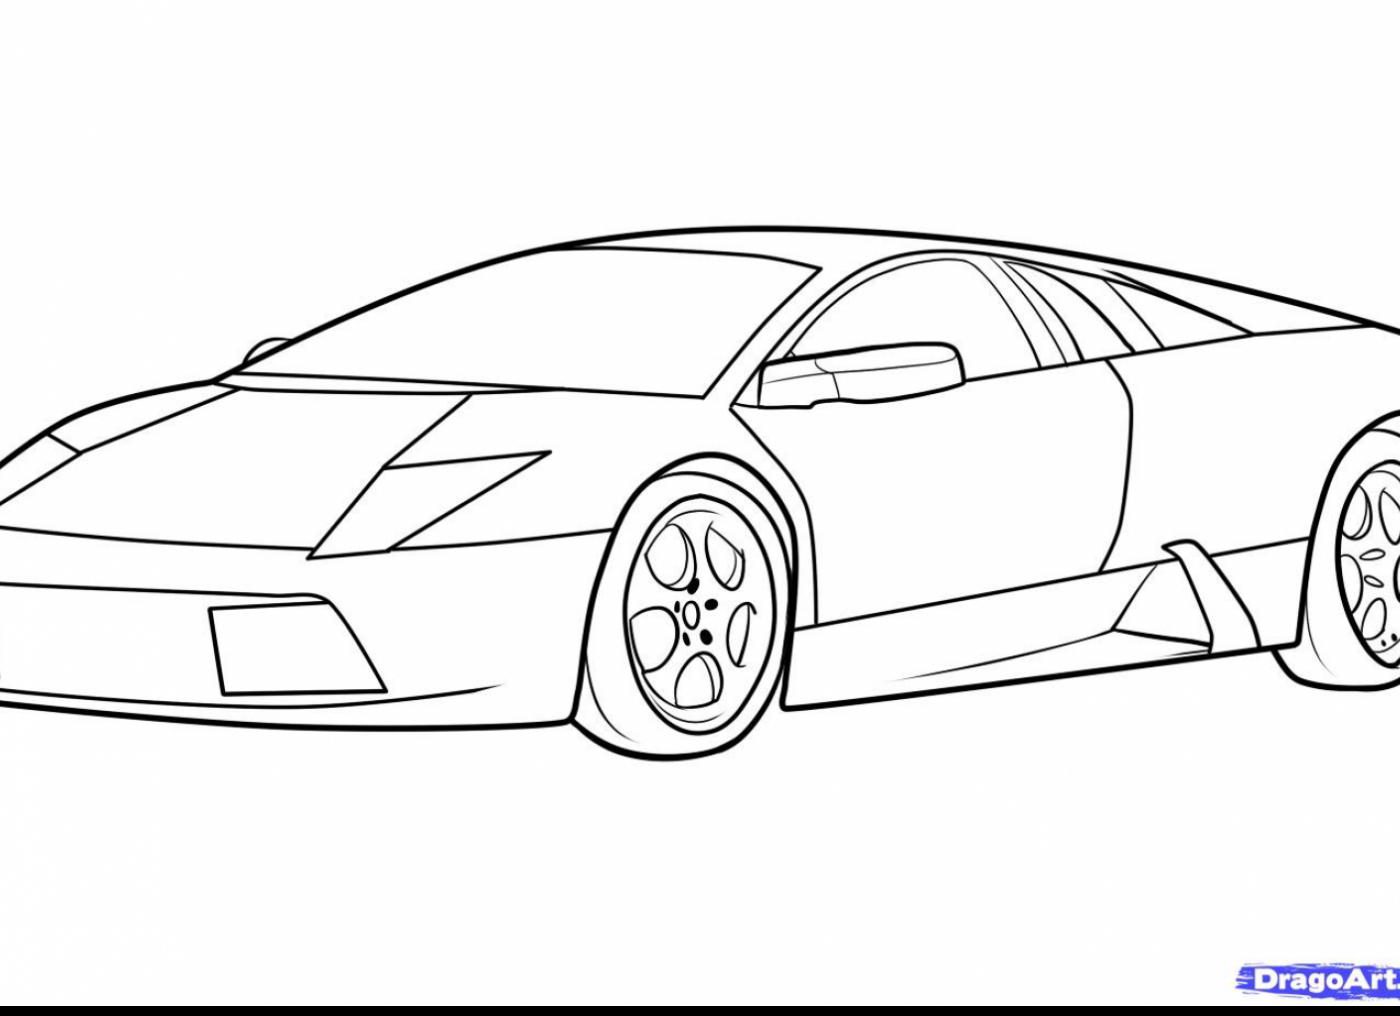 Lamborghini Aventador Coloring Pages at GetColorings.com | Free ...